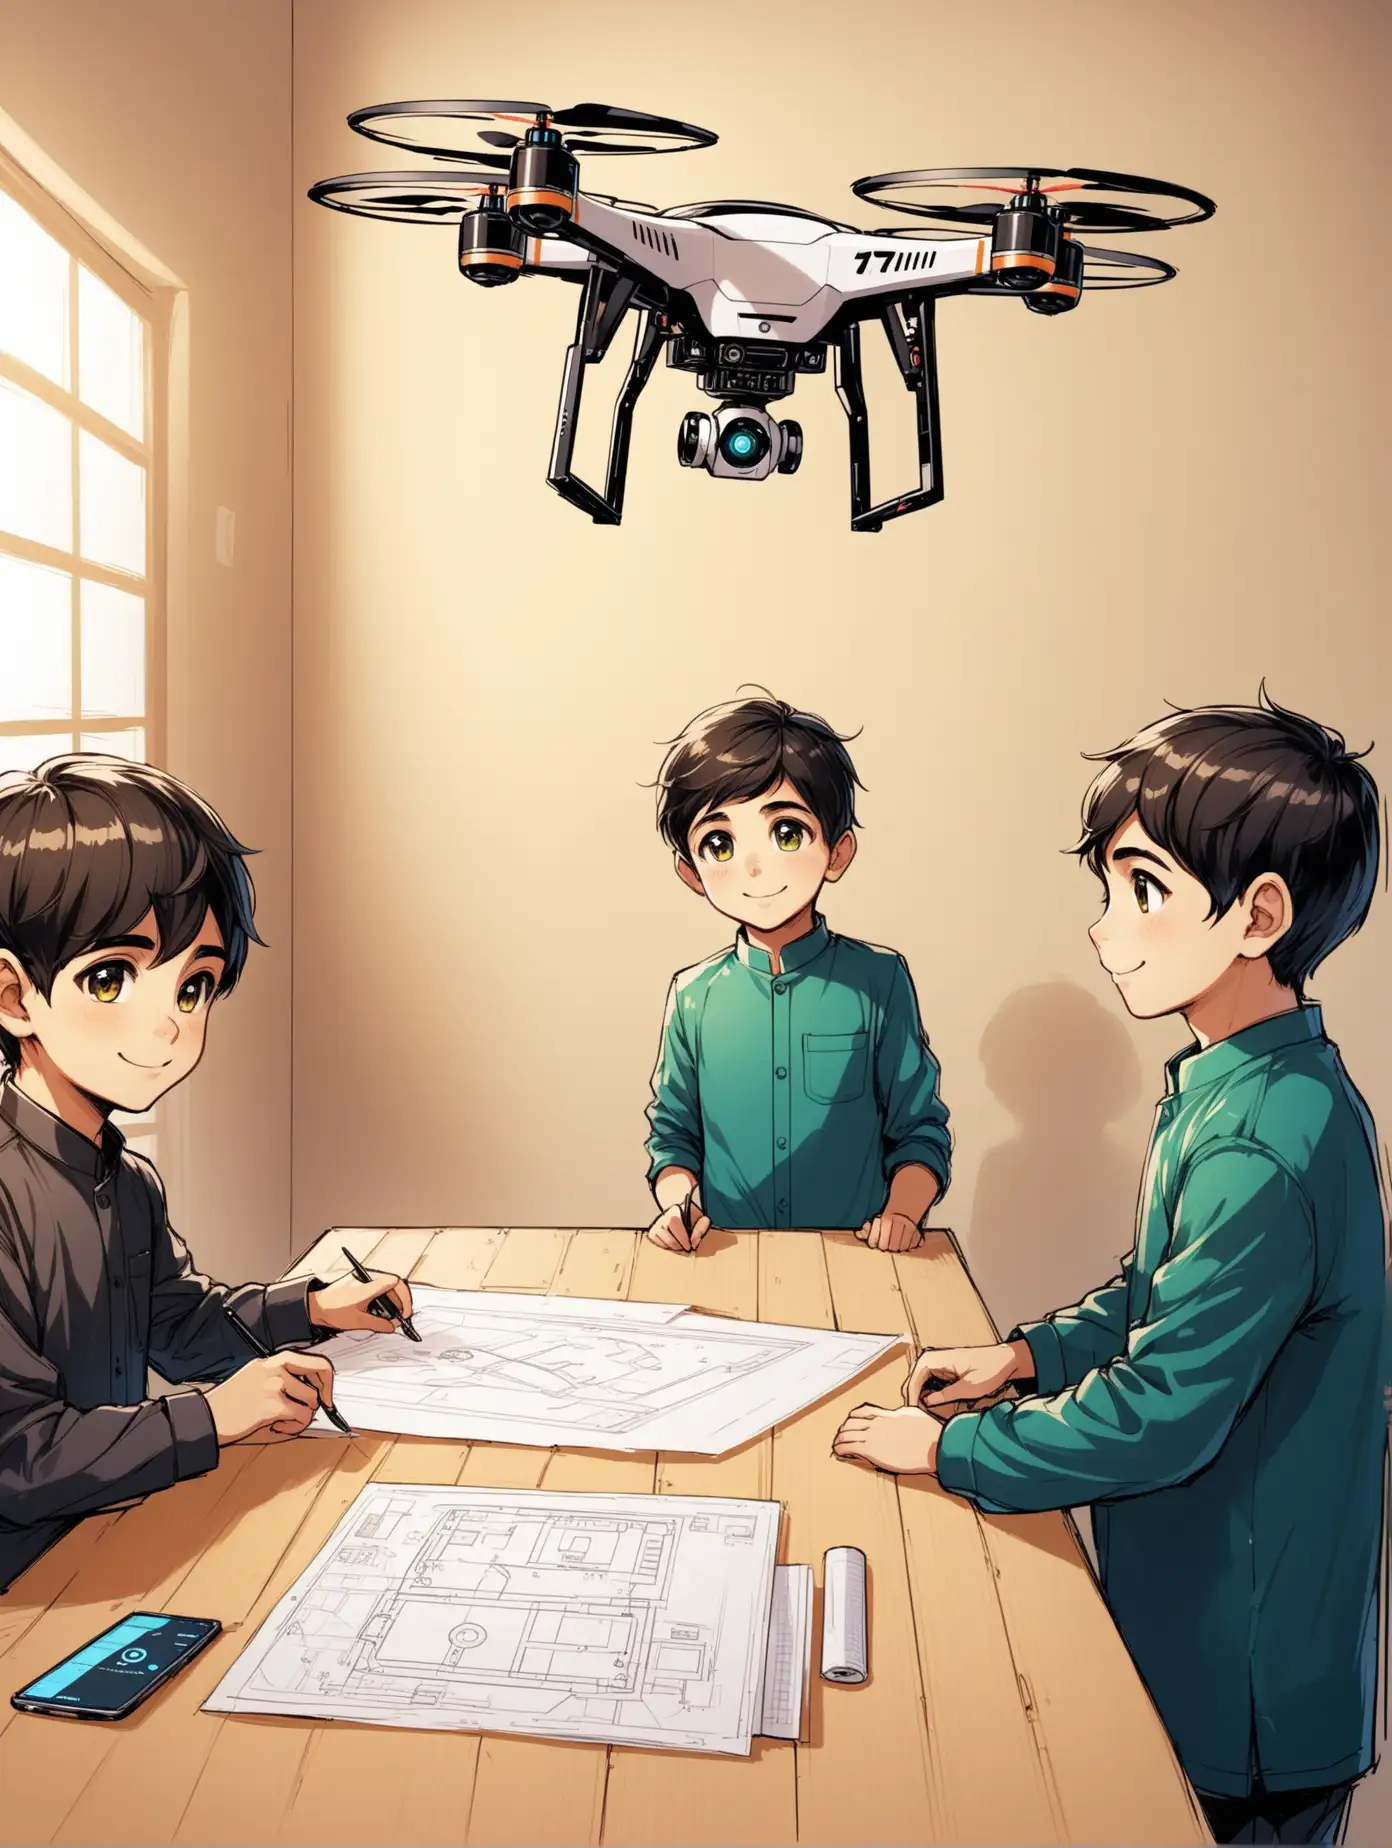 Persian Boys Designing HighTech Drones in Modern Workshop